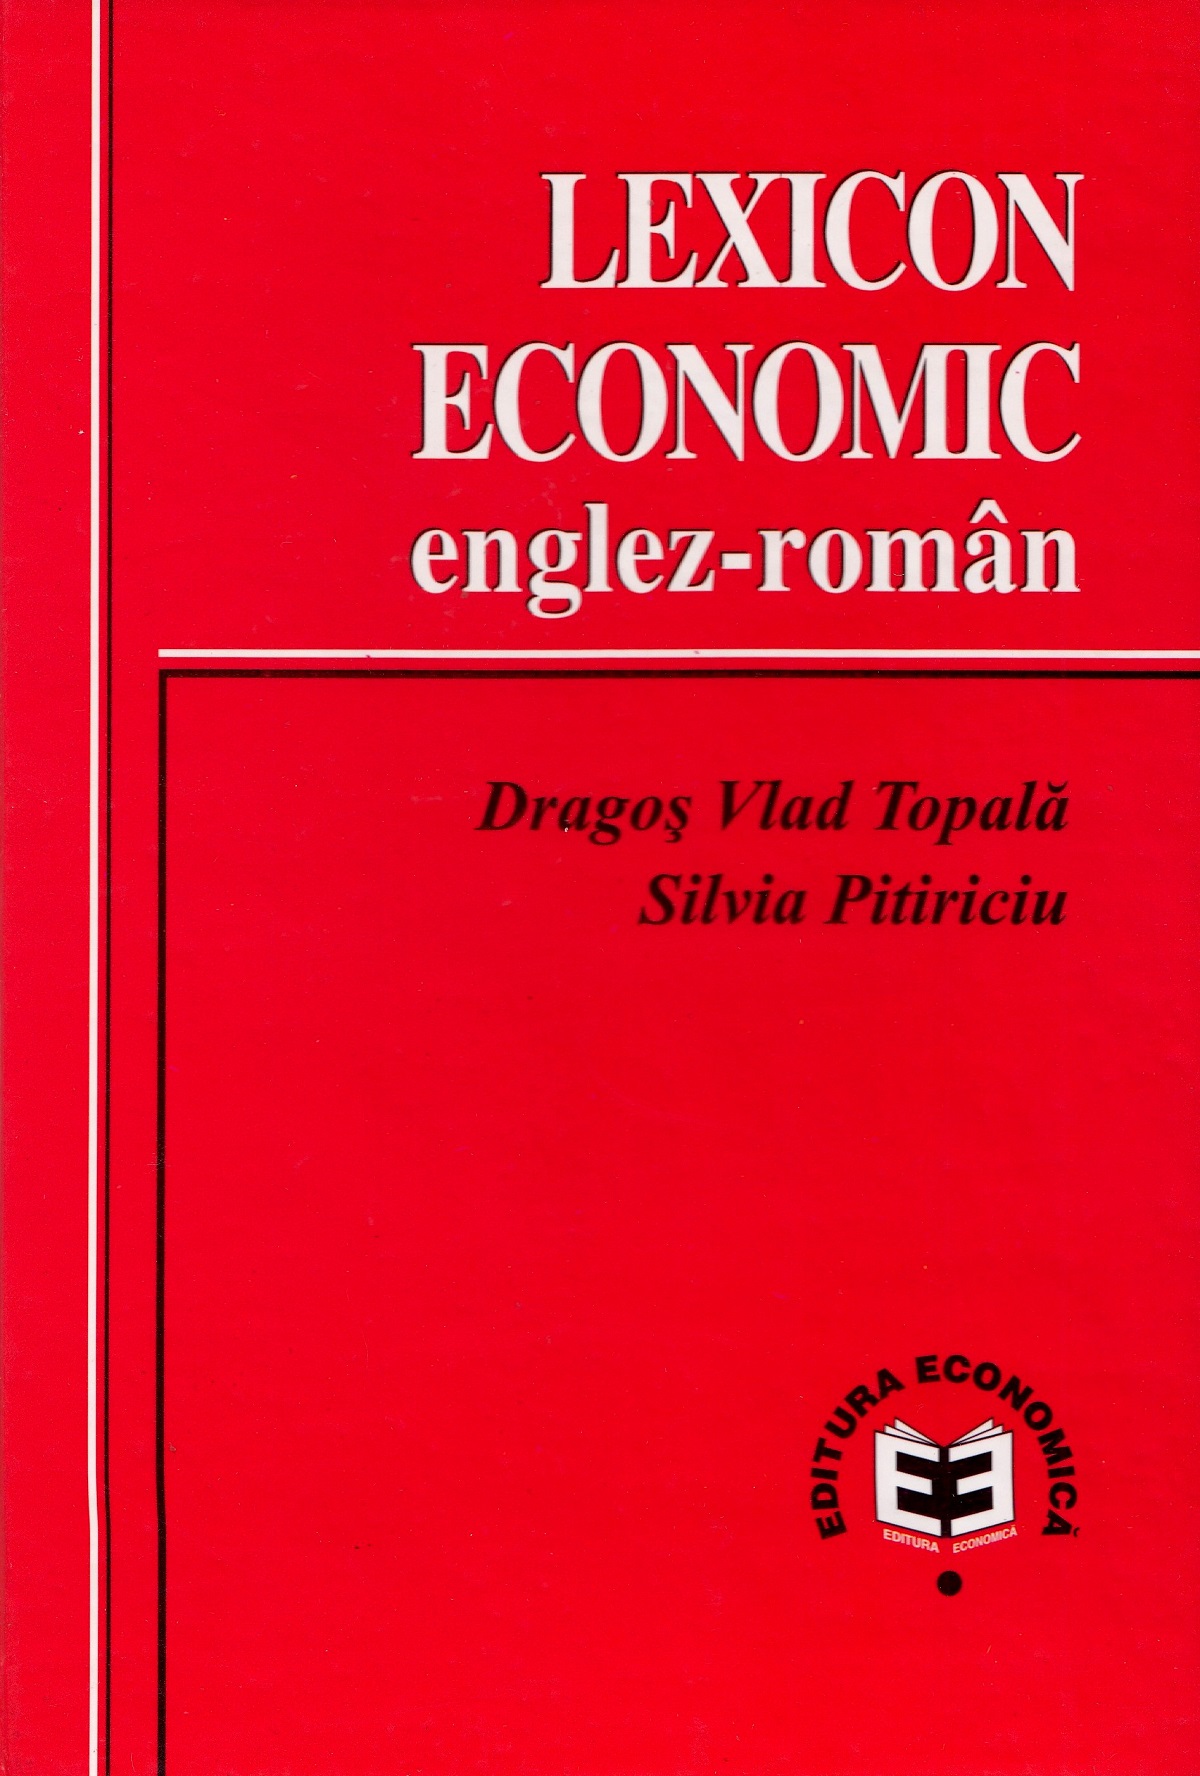 Lexicon economic englez-roman - Dragos Vlad Topala, Silvia Pitiriciu